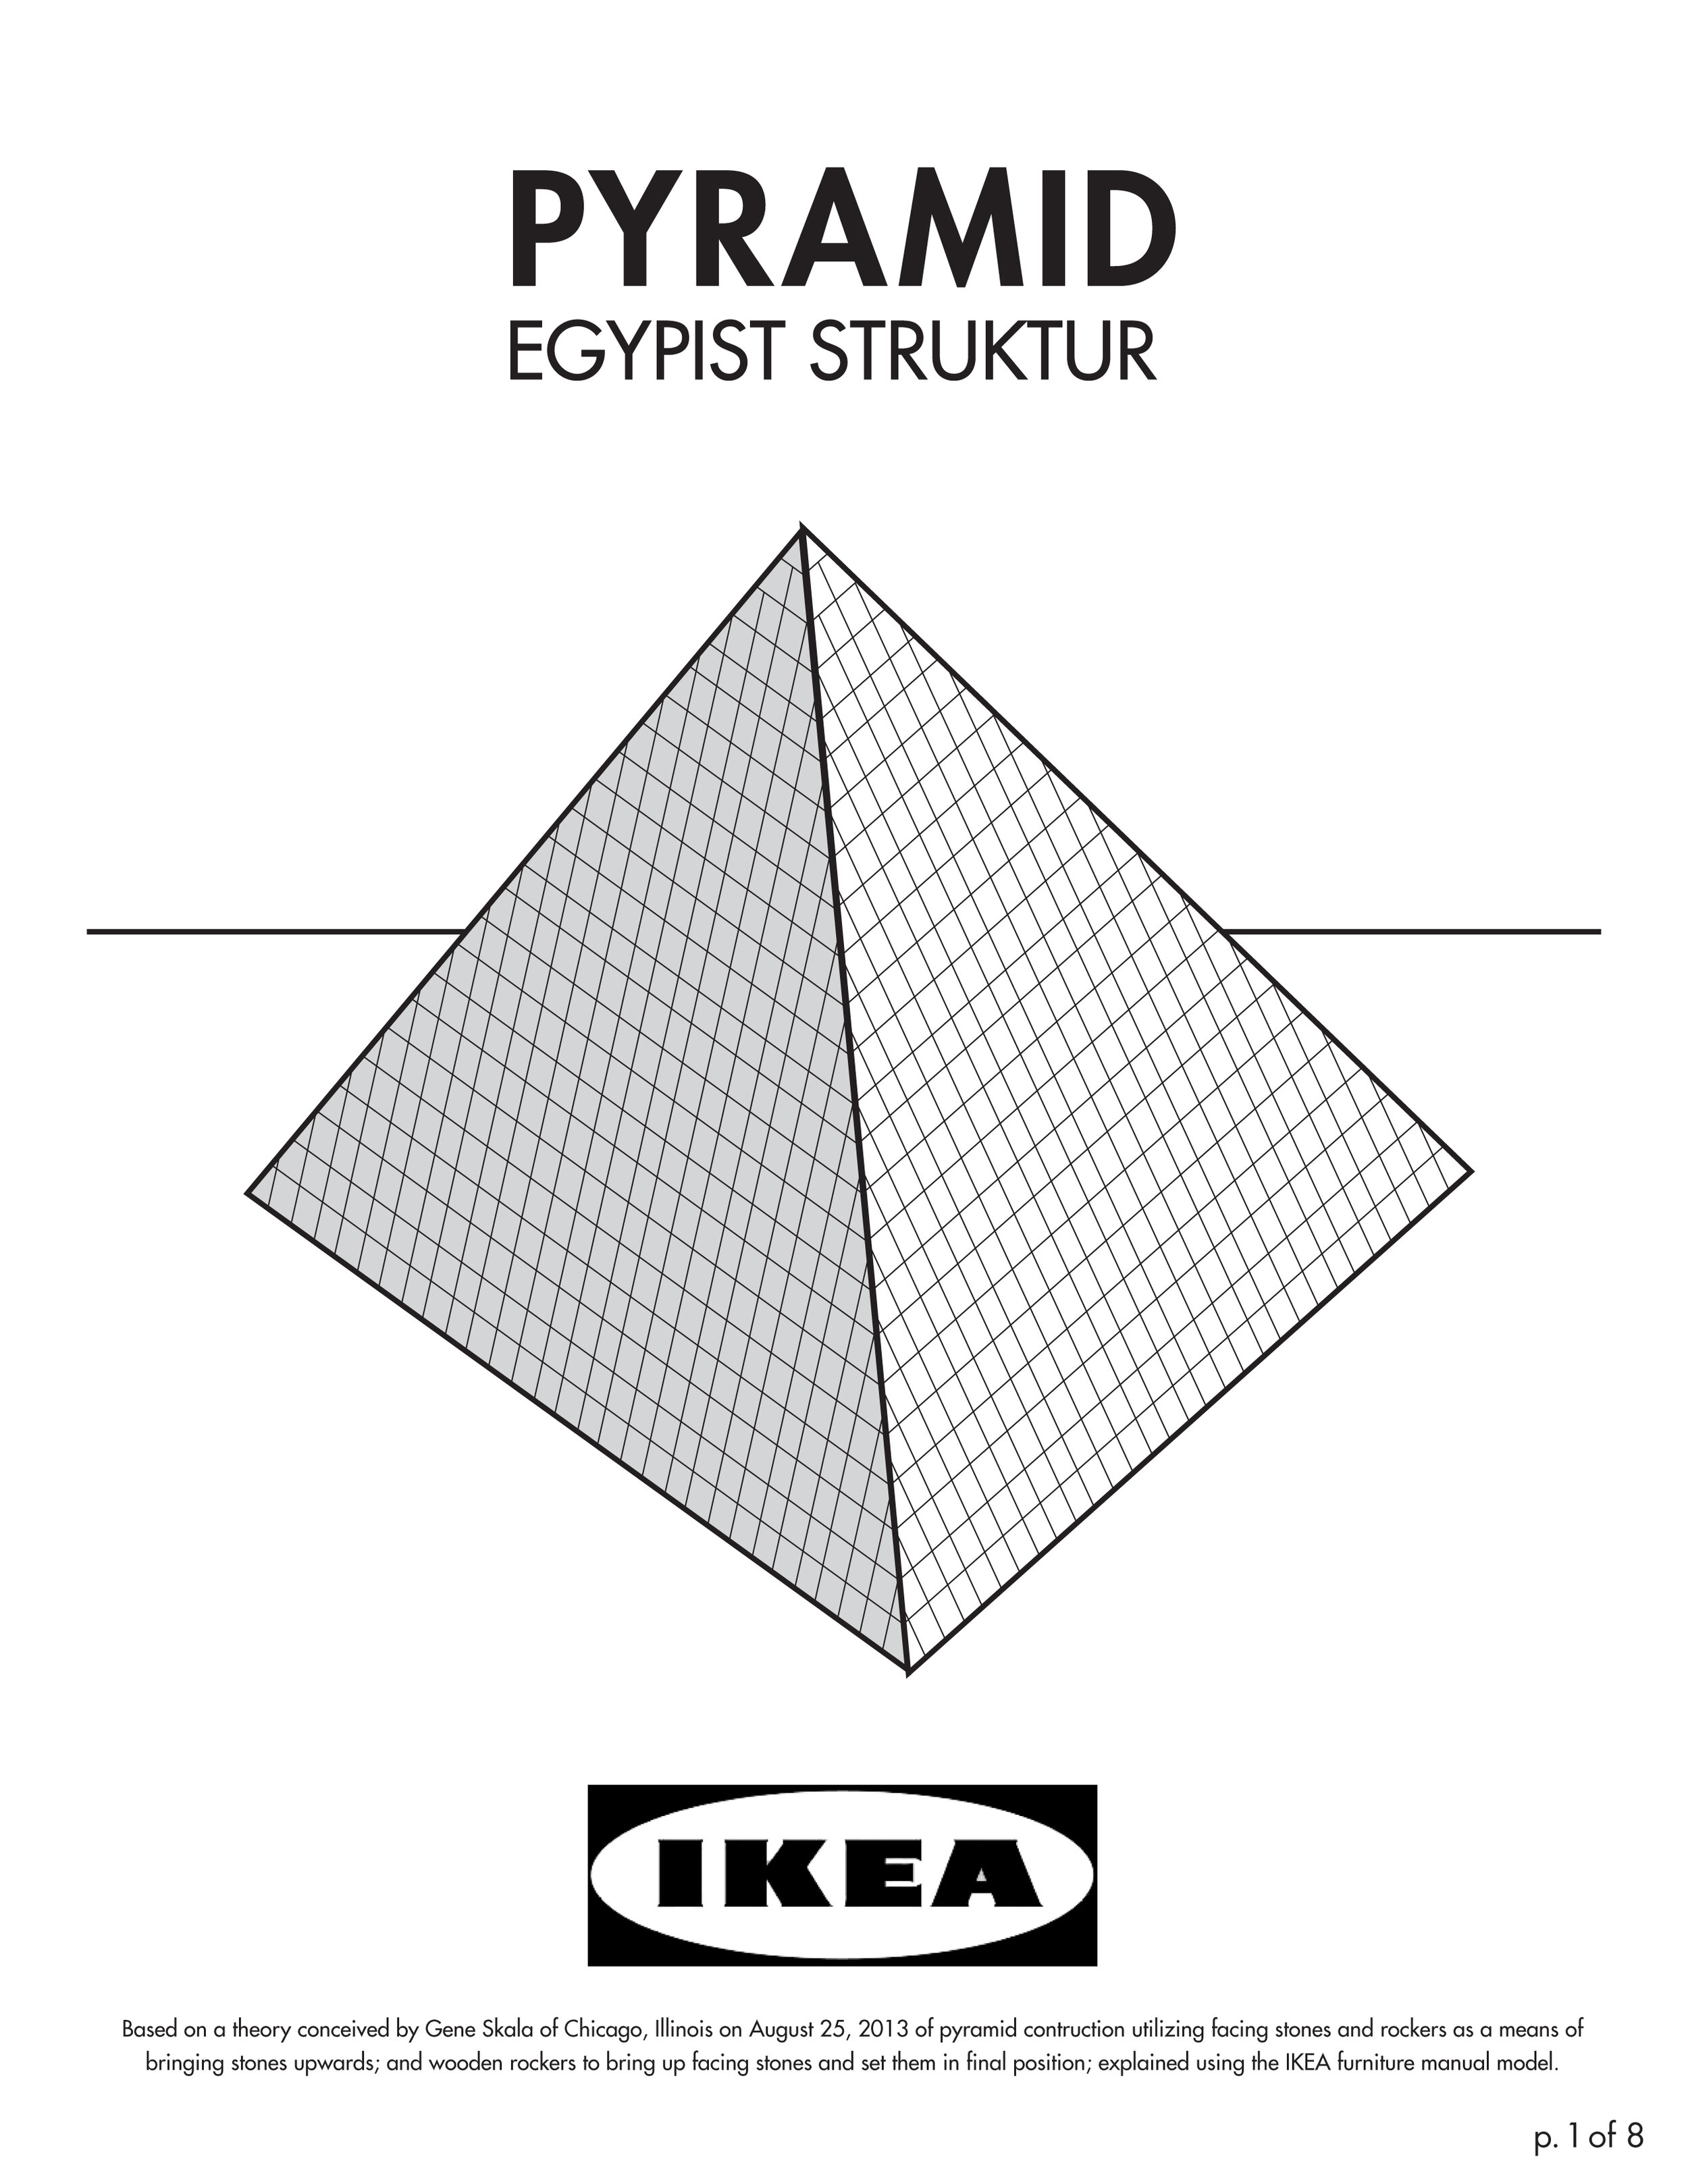 IKEA Pyramid_page 1_Final.jpg